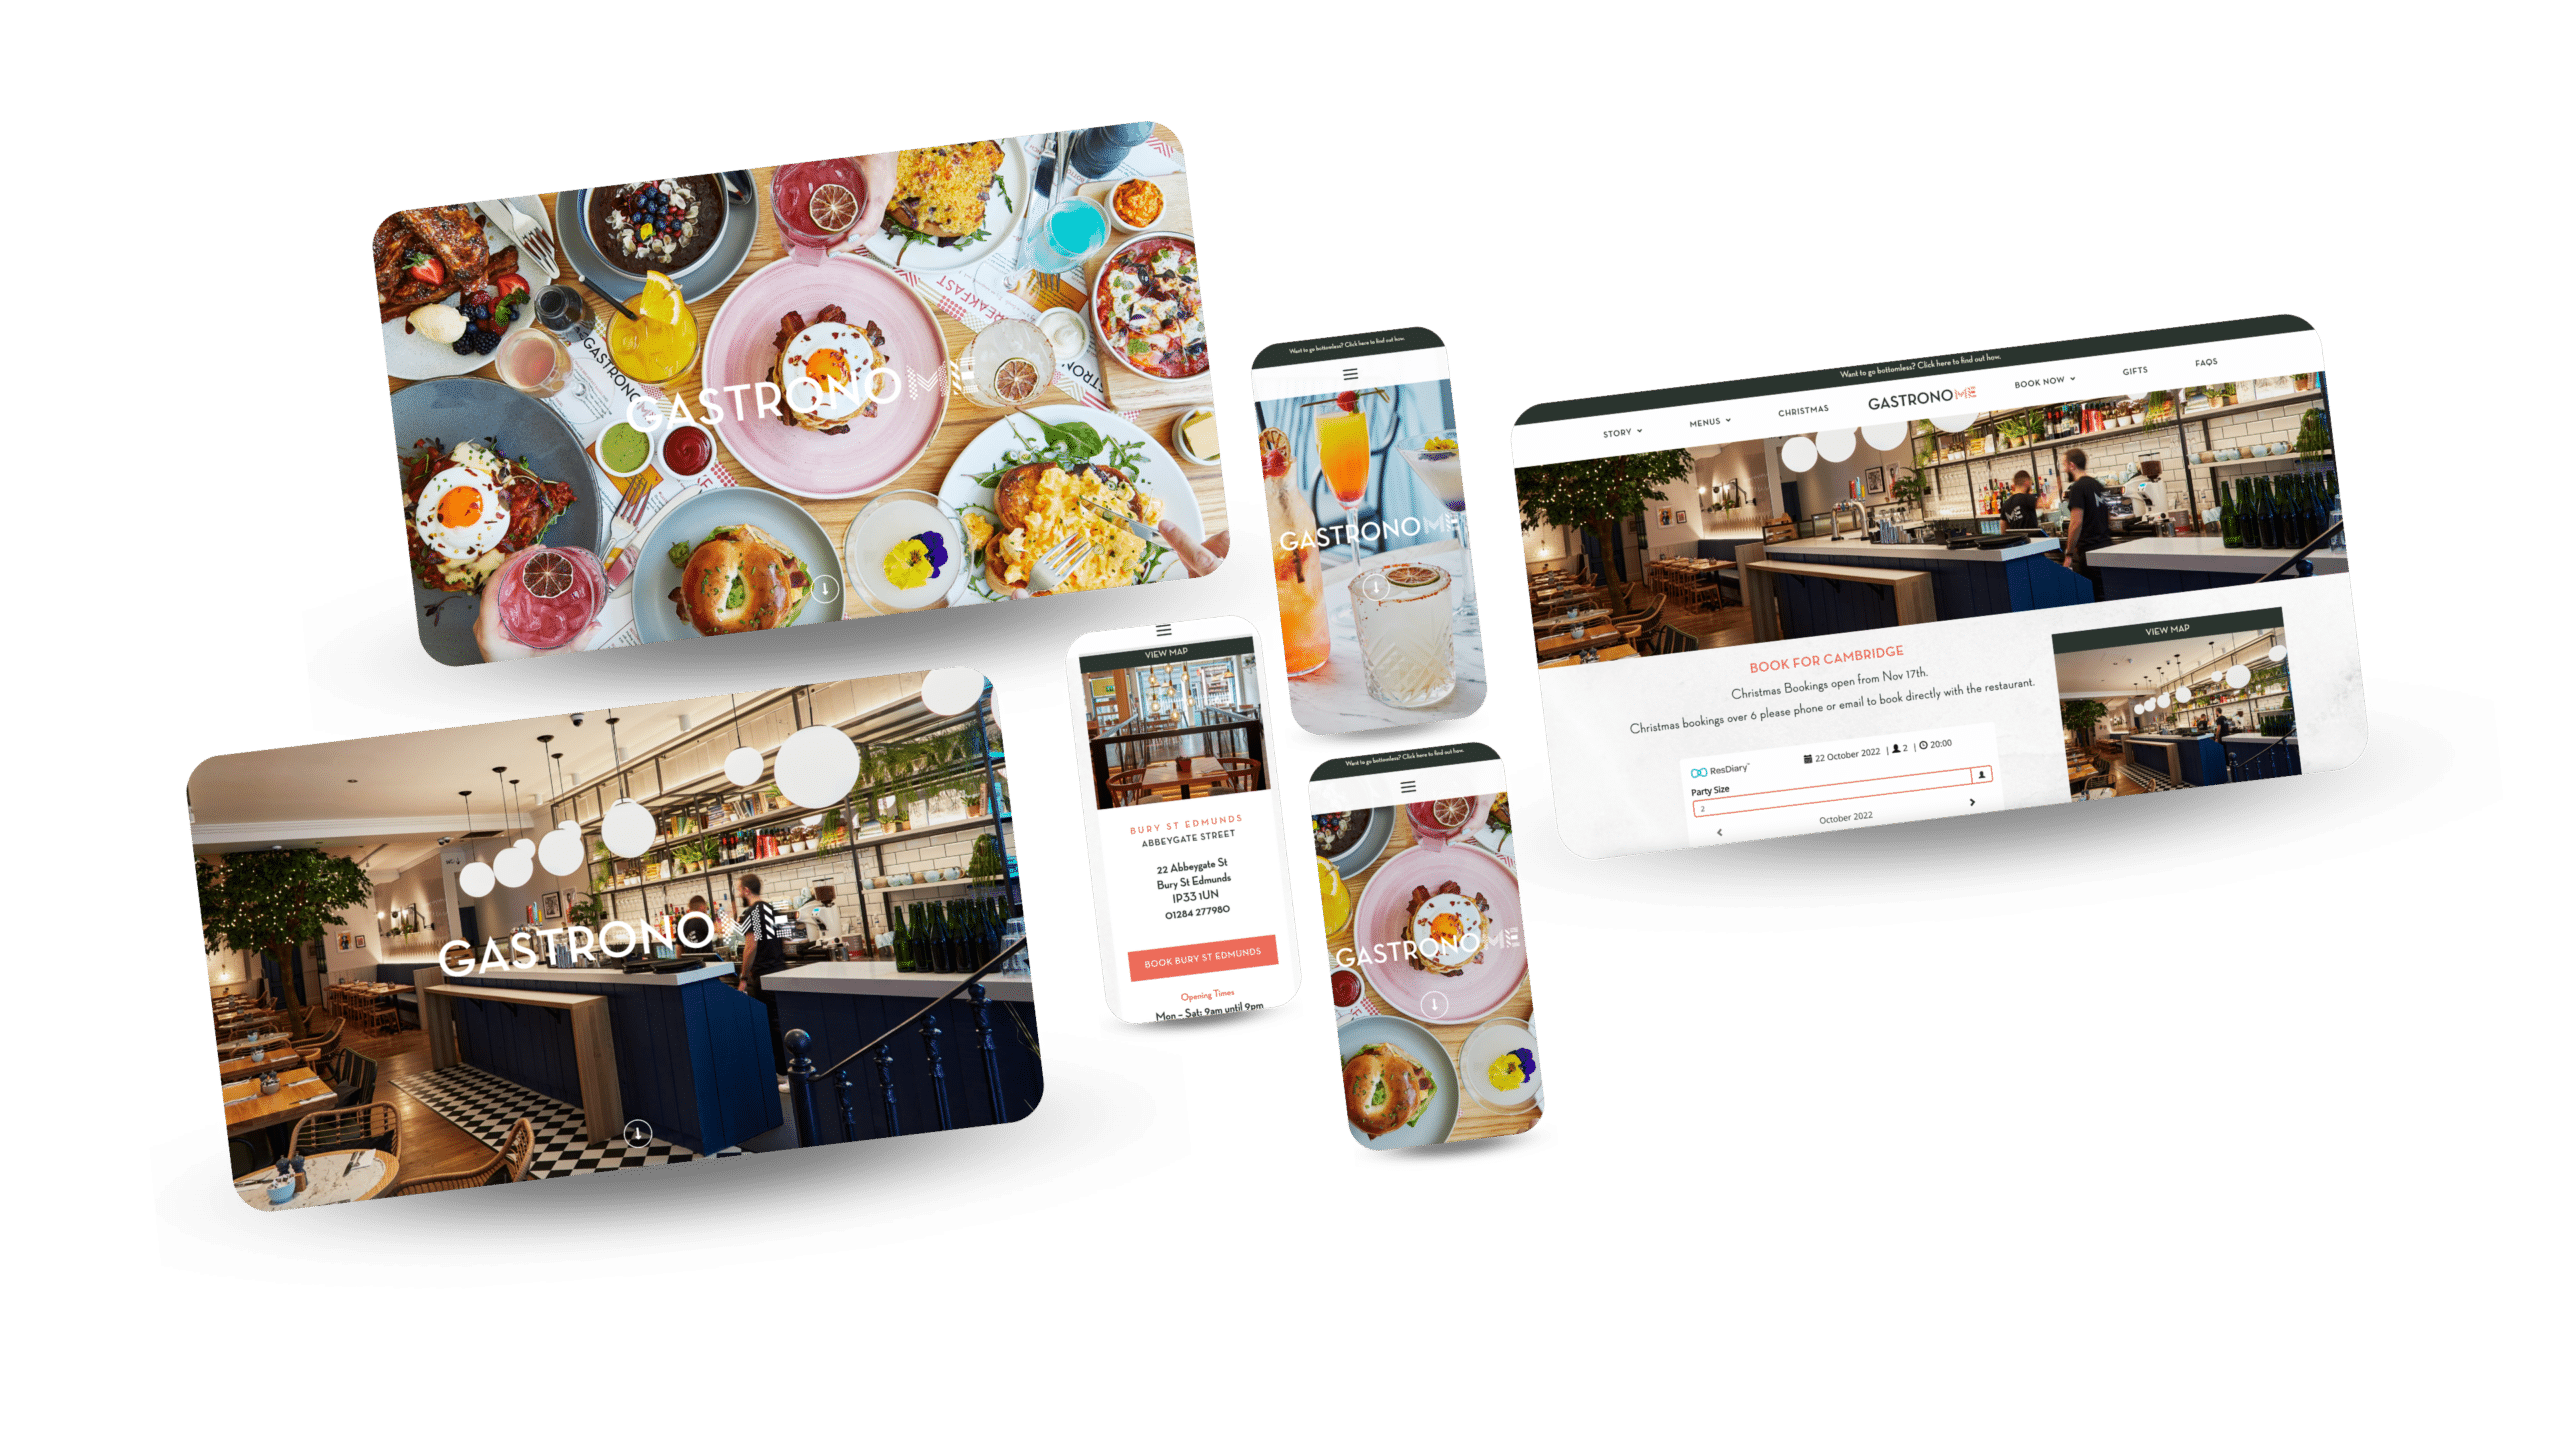 Gastrono-me Bury St Edmunds- Web Design by Design for Online in Bury St Edmunds